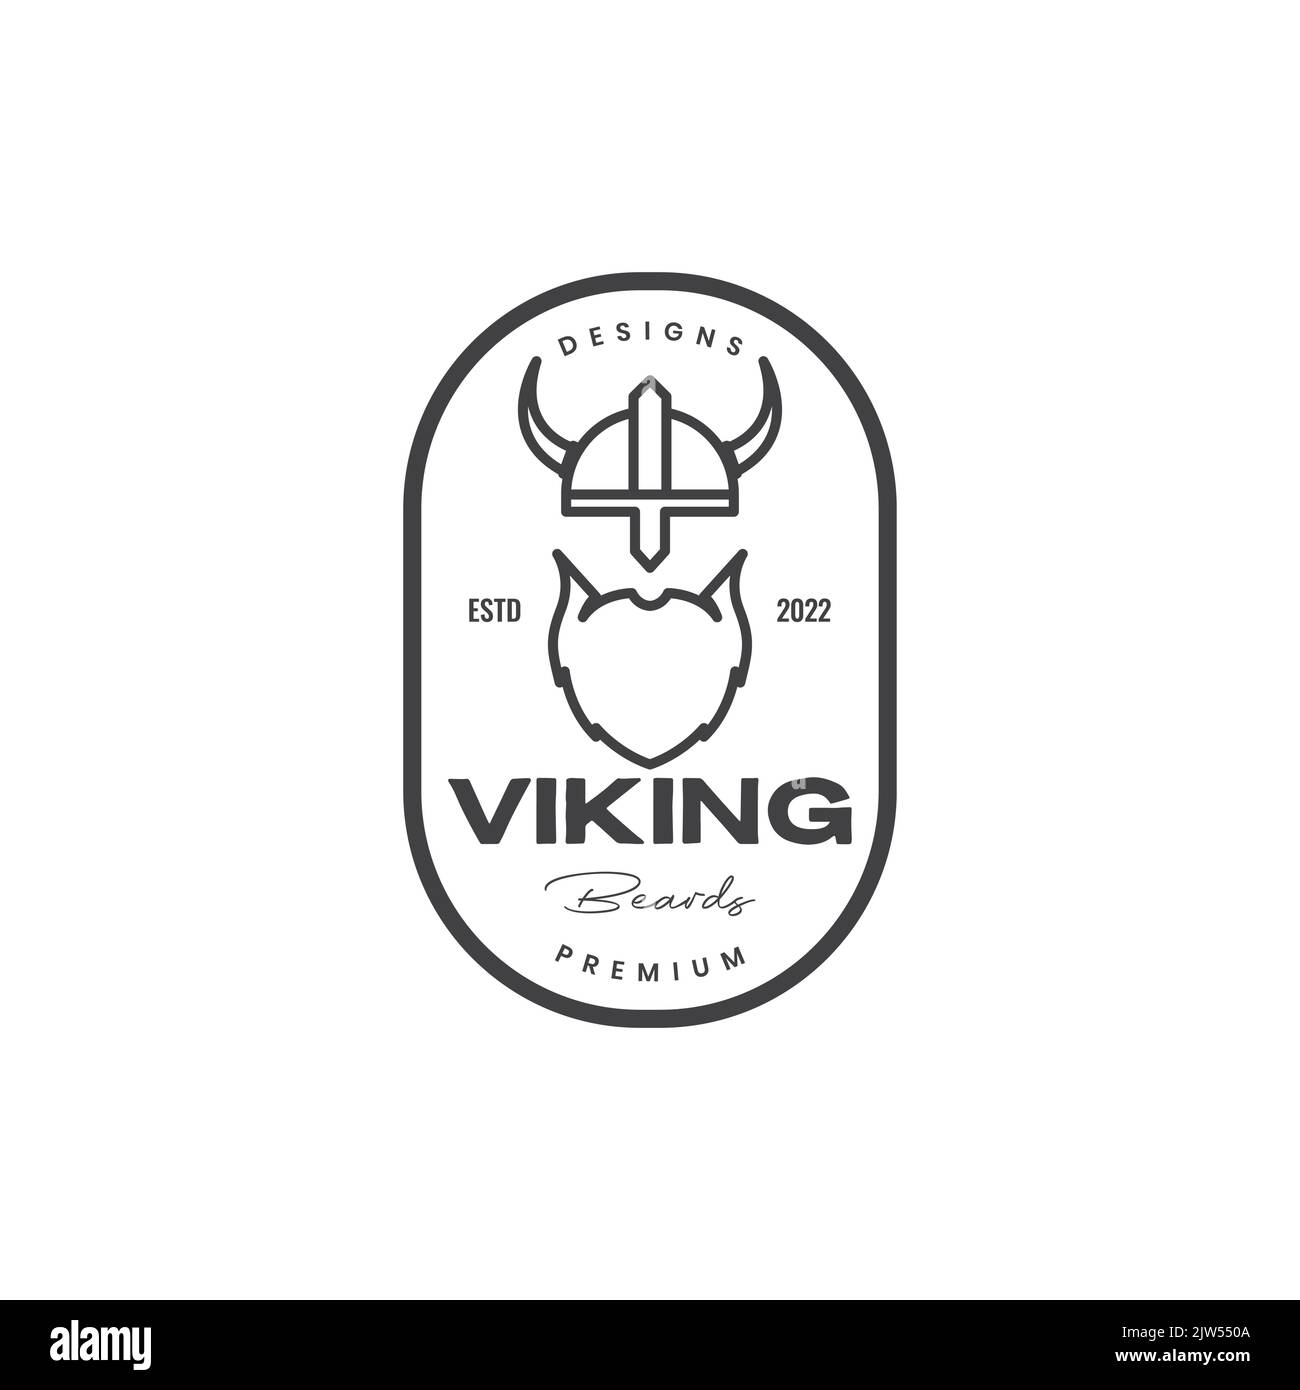 old man viking beard logo design badge vintage Stock Vector